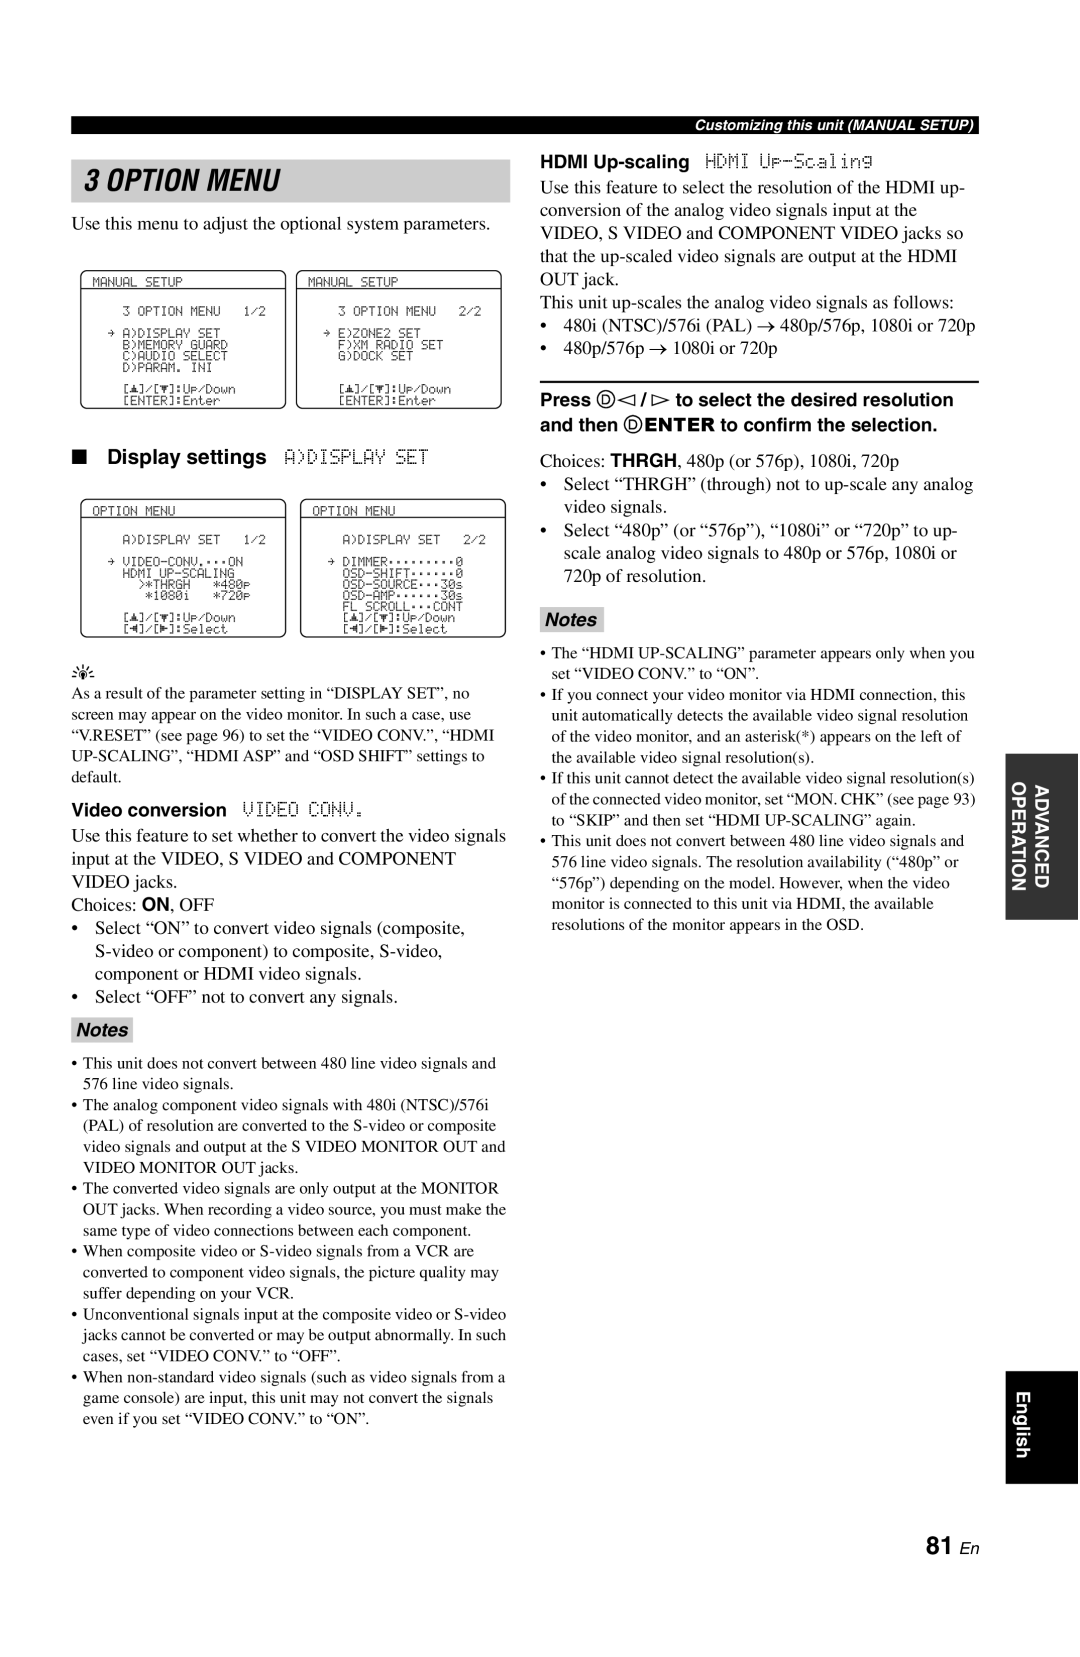 Yamaha RX-V861 owner manual Option Menu, 81 En, Display settings ADISPLAY SET, Notes 